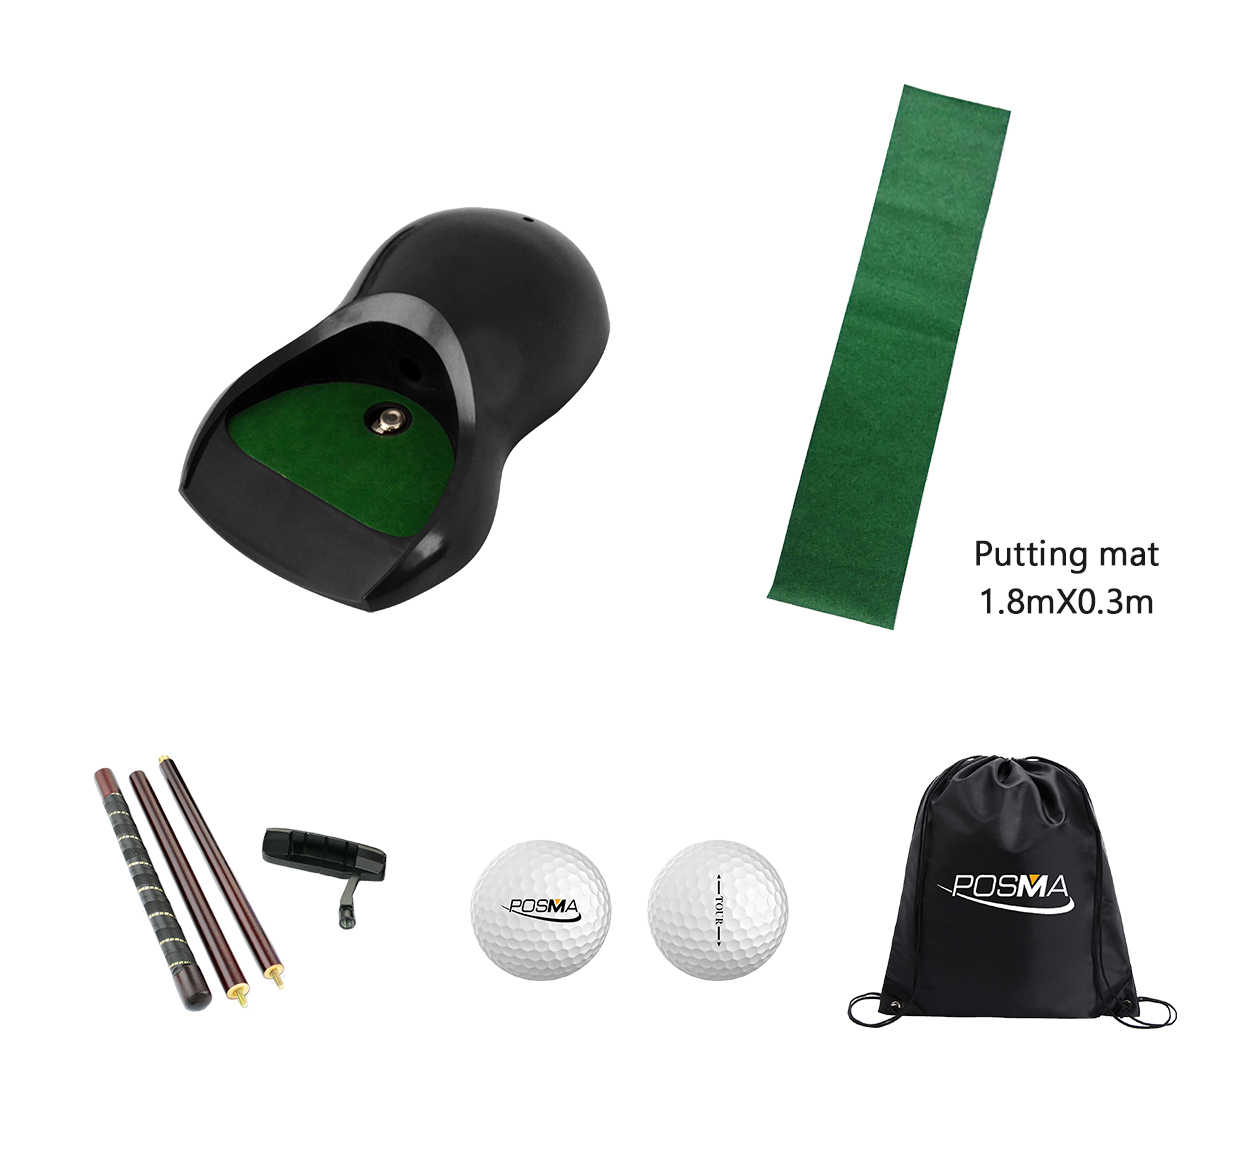 Posma PG160D 高爾夫自動回球器套組-葫蘆款+練習草皮+可拆式木質推桿+Posma 高爾夫球+Posma束口後背包